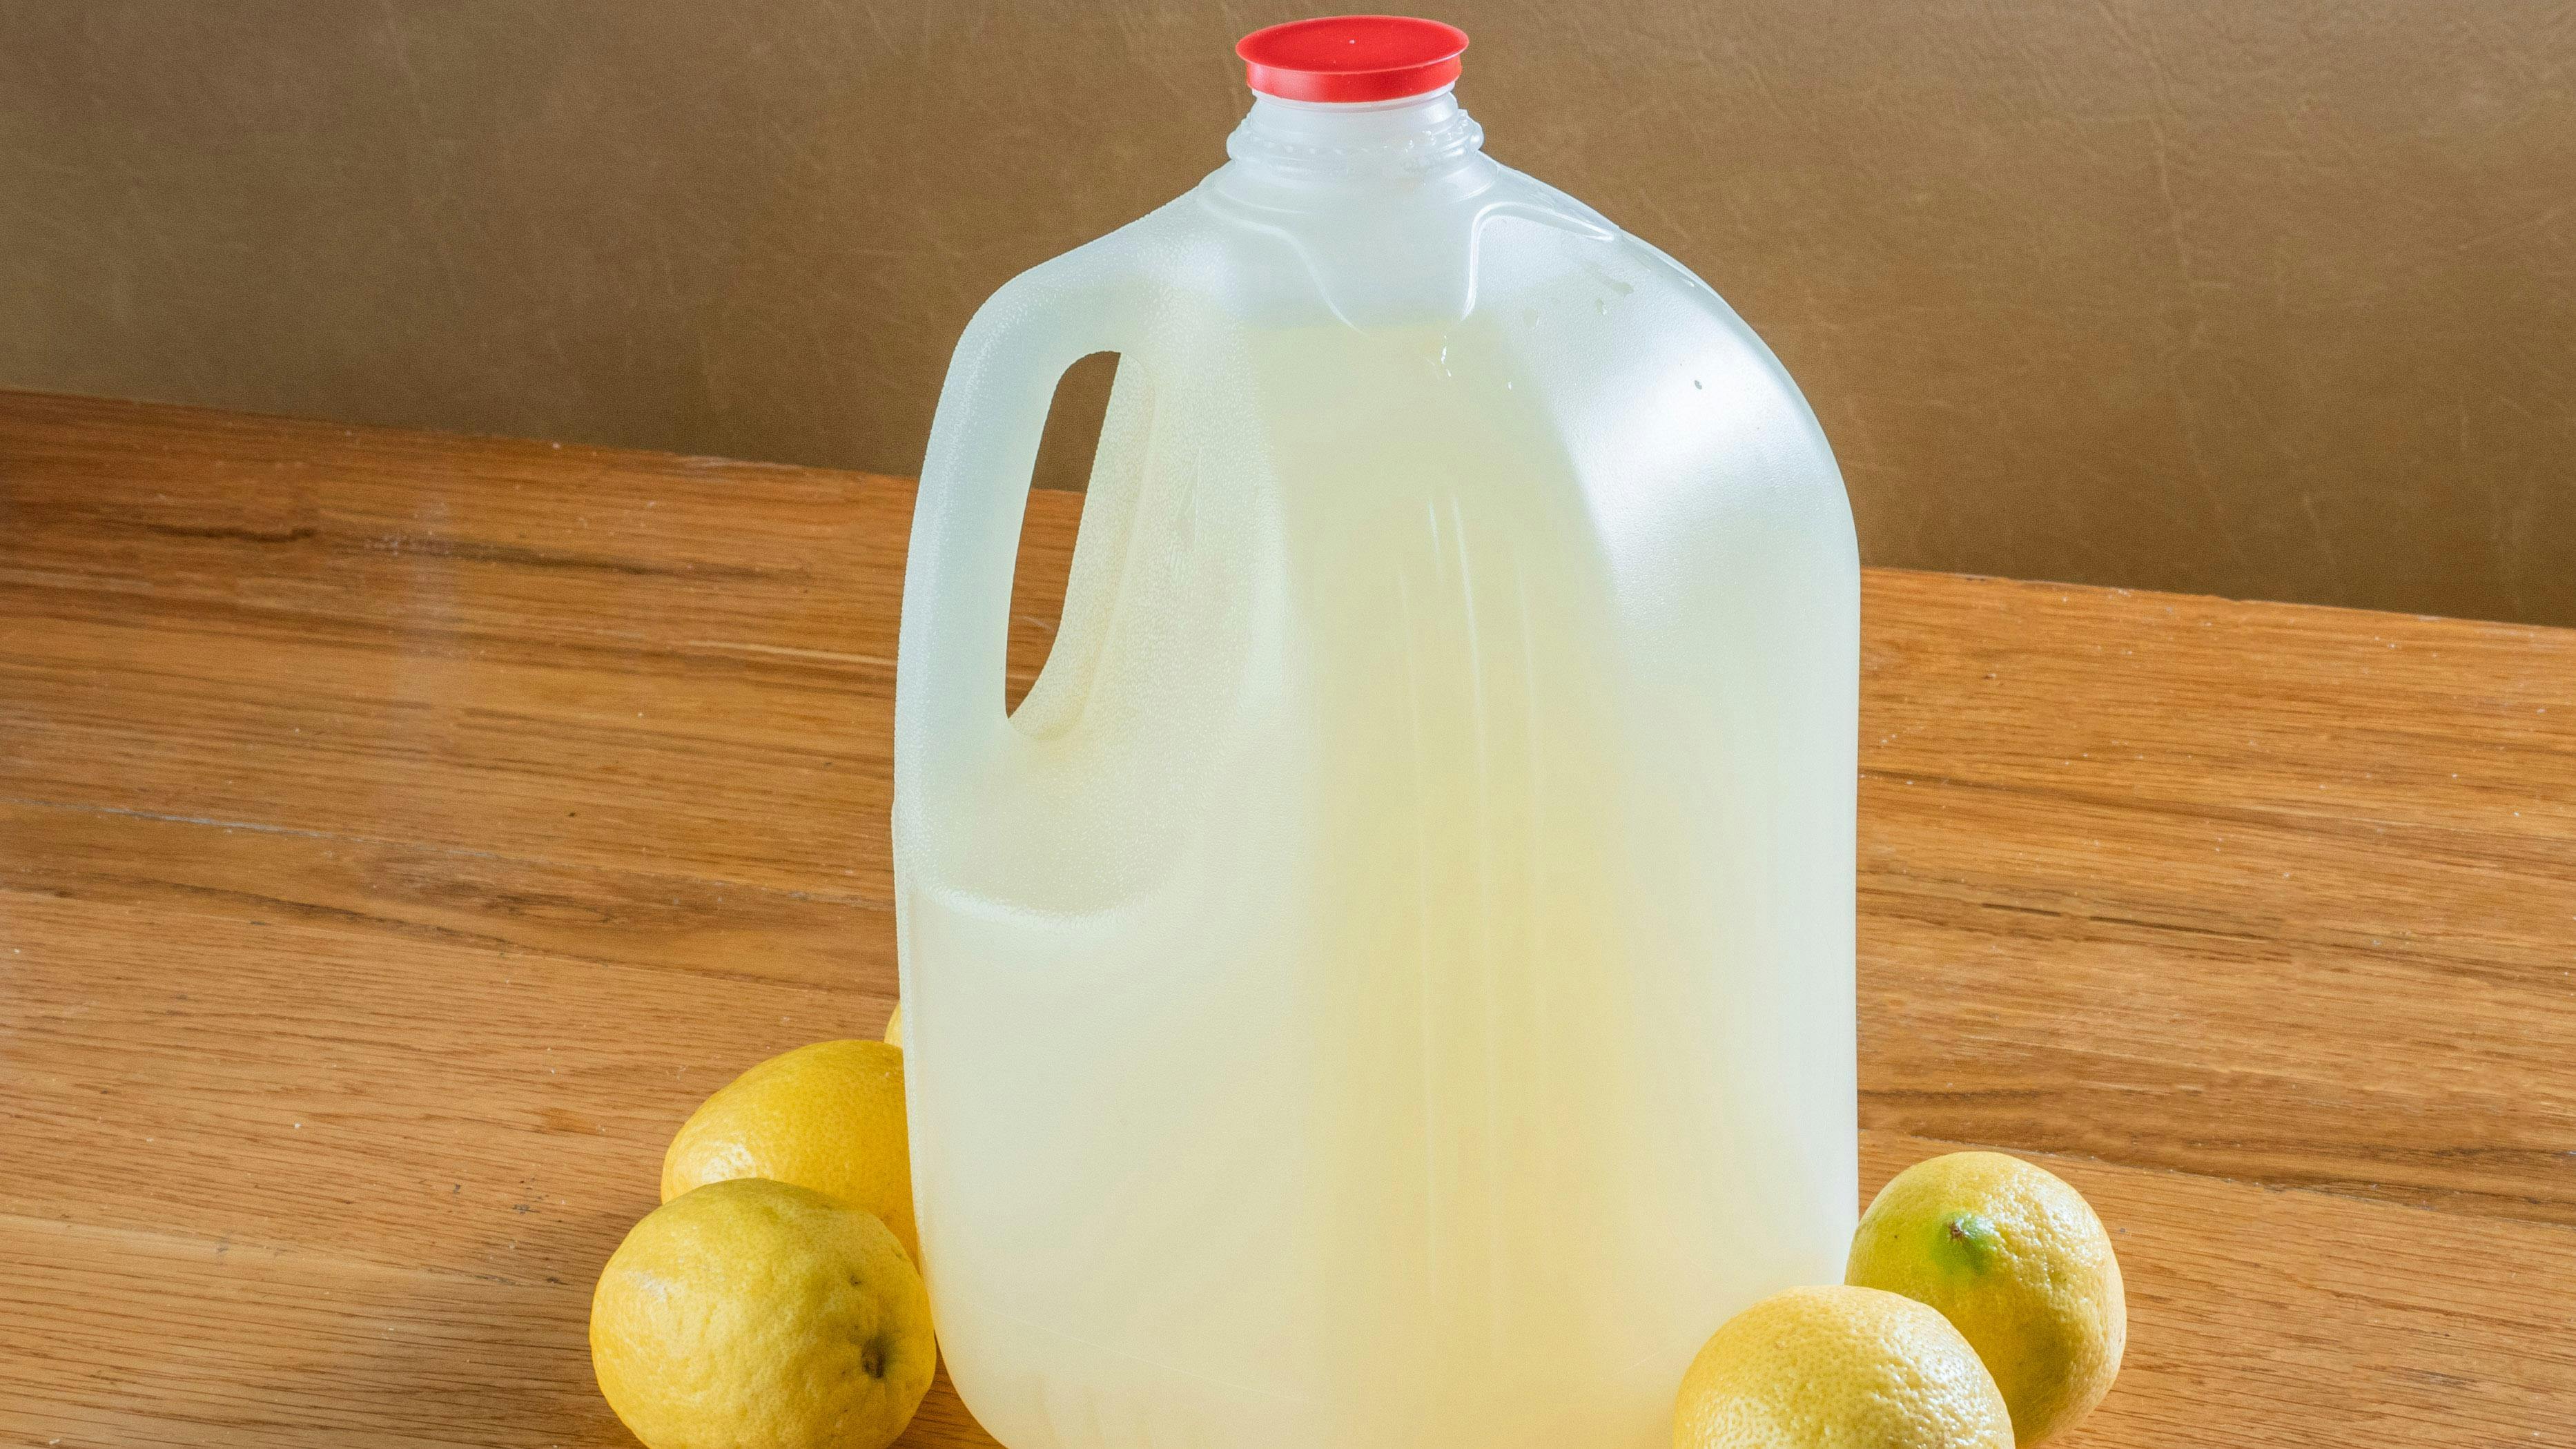 Gallon Lemonade from Happy Chicks - Research Blvd in Austin, TX